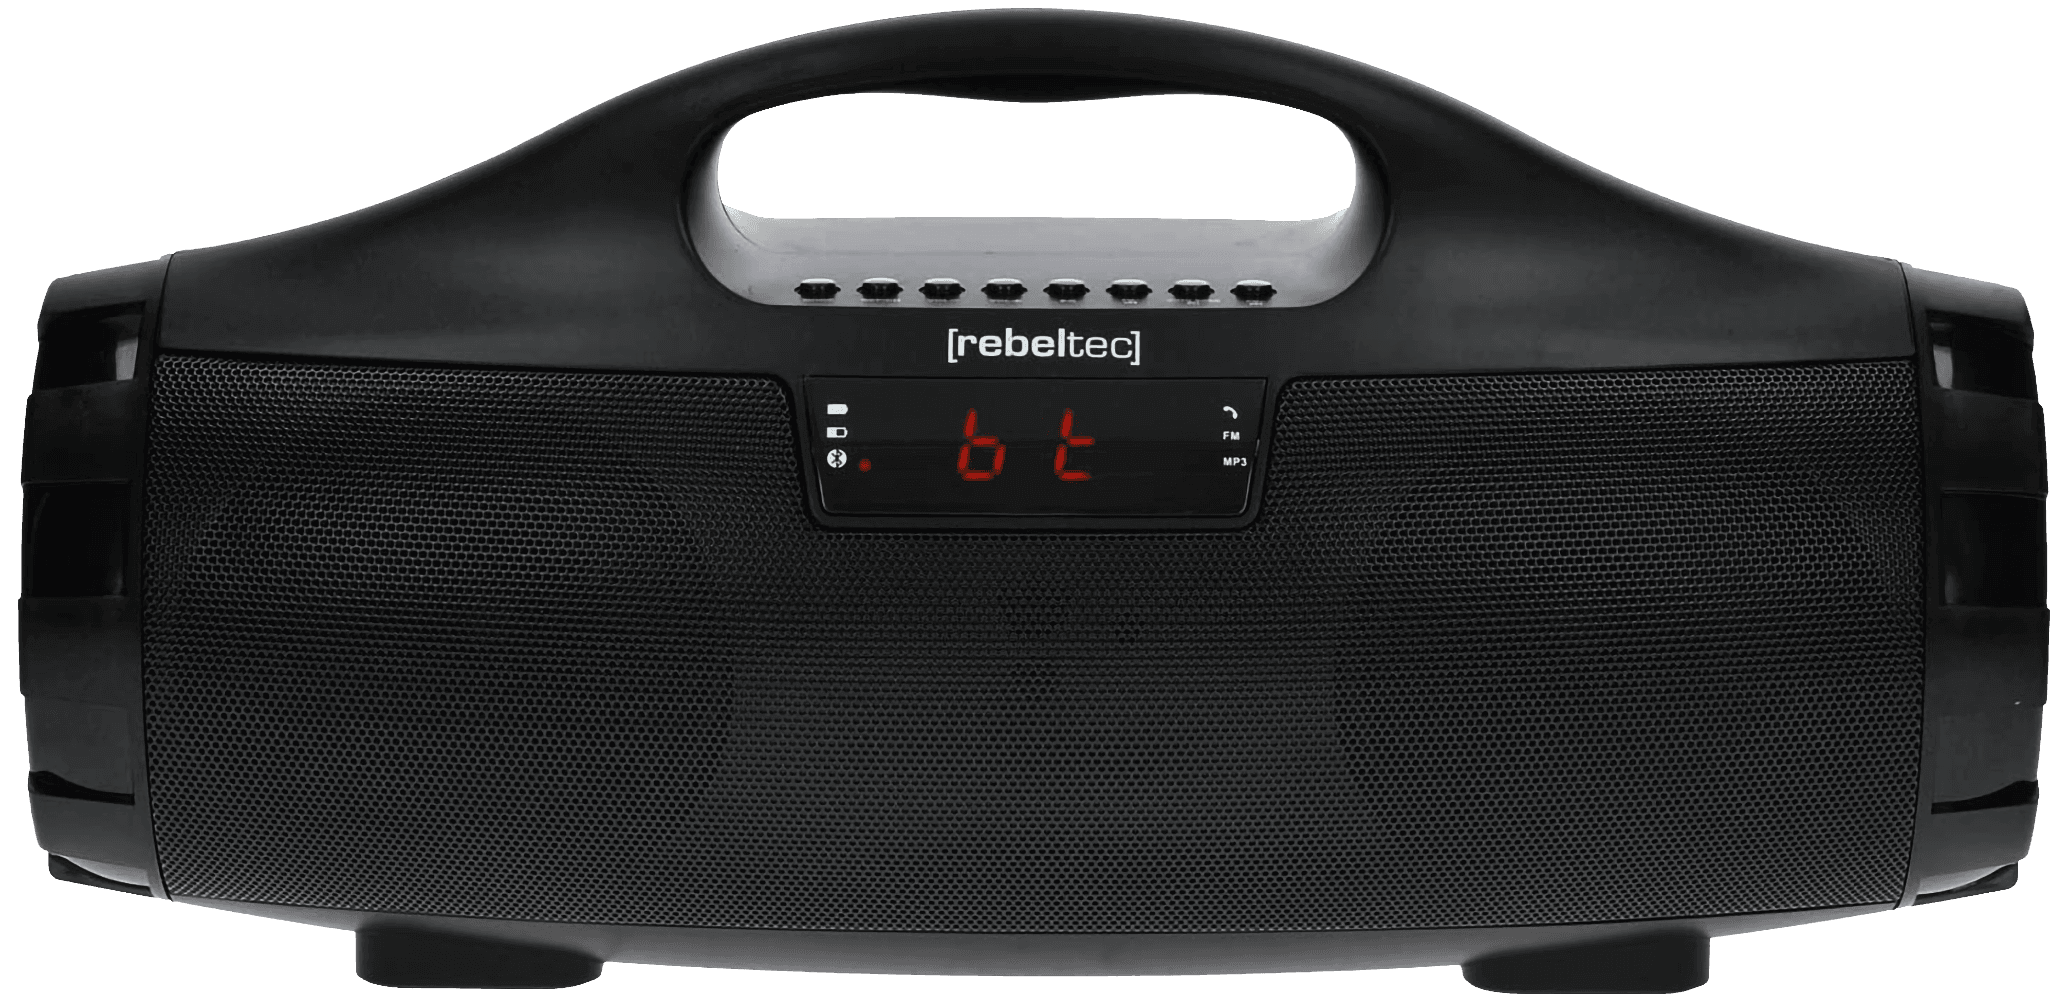 Huawei Y5P kompatibilis bluetooth hangszóró Rebeltec Soundbox 390 fekete